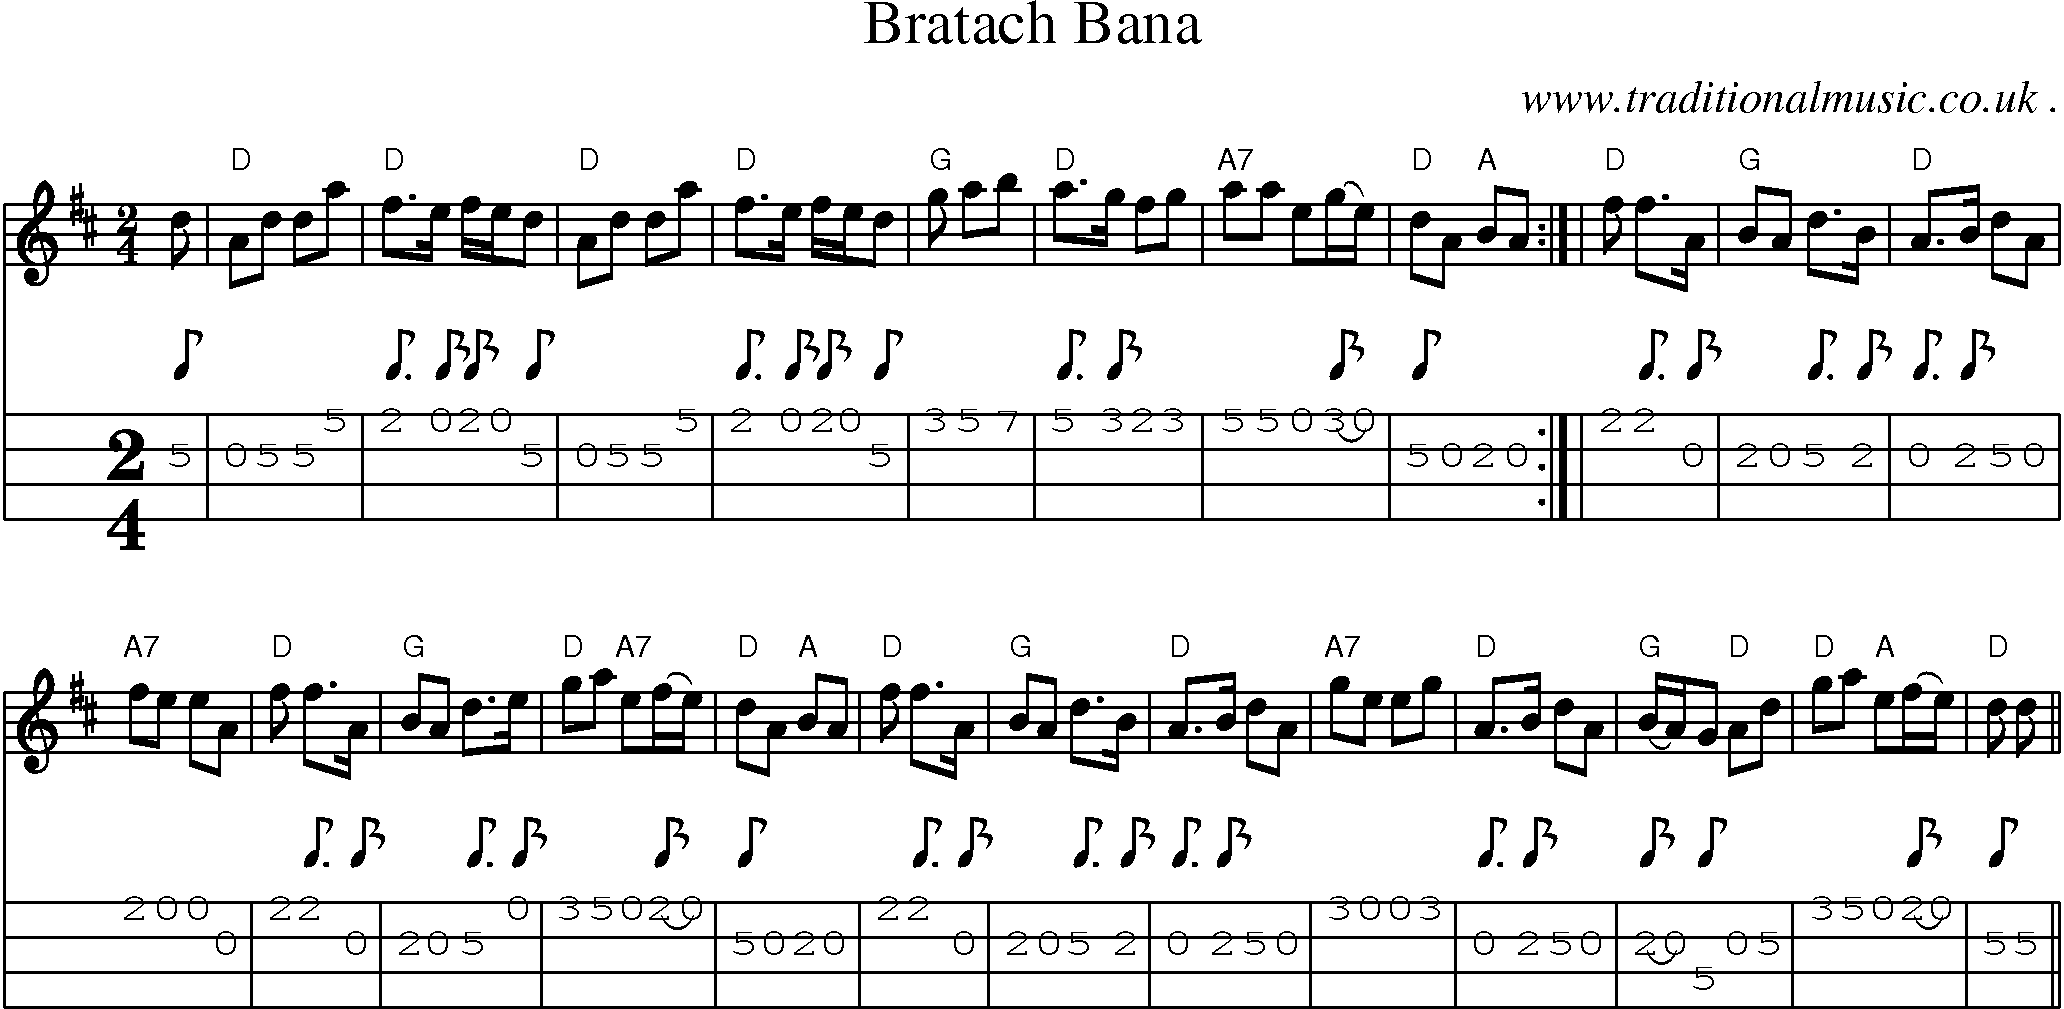 Sheet-music  score, Chords and Mandolin Tabs for Bratach Bana